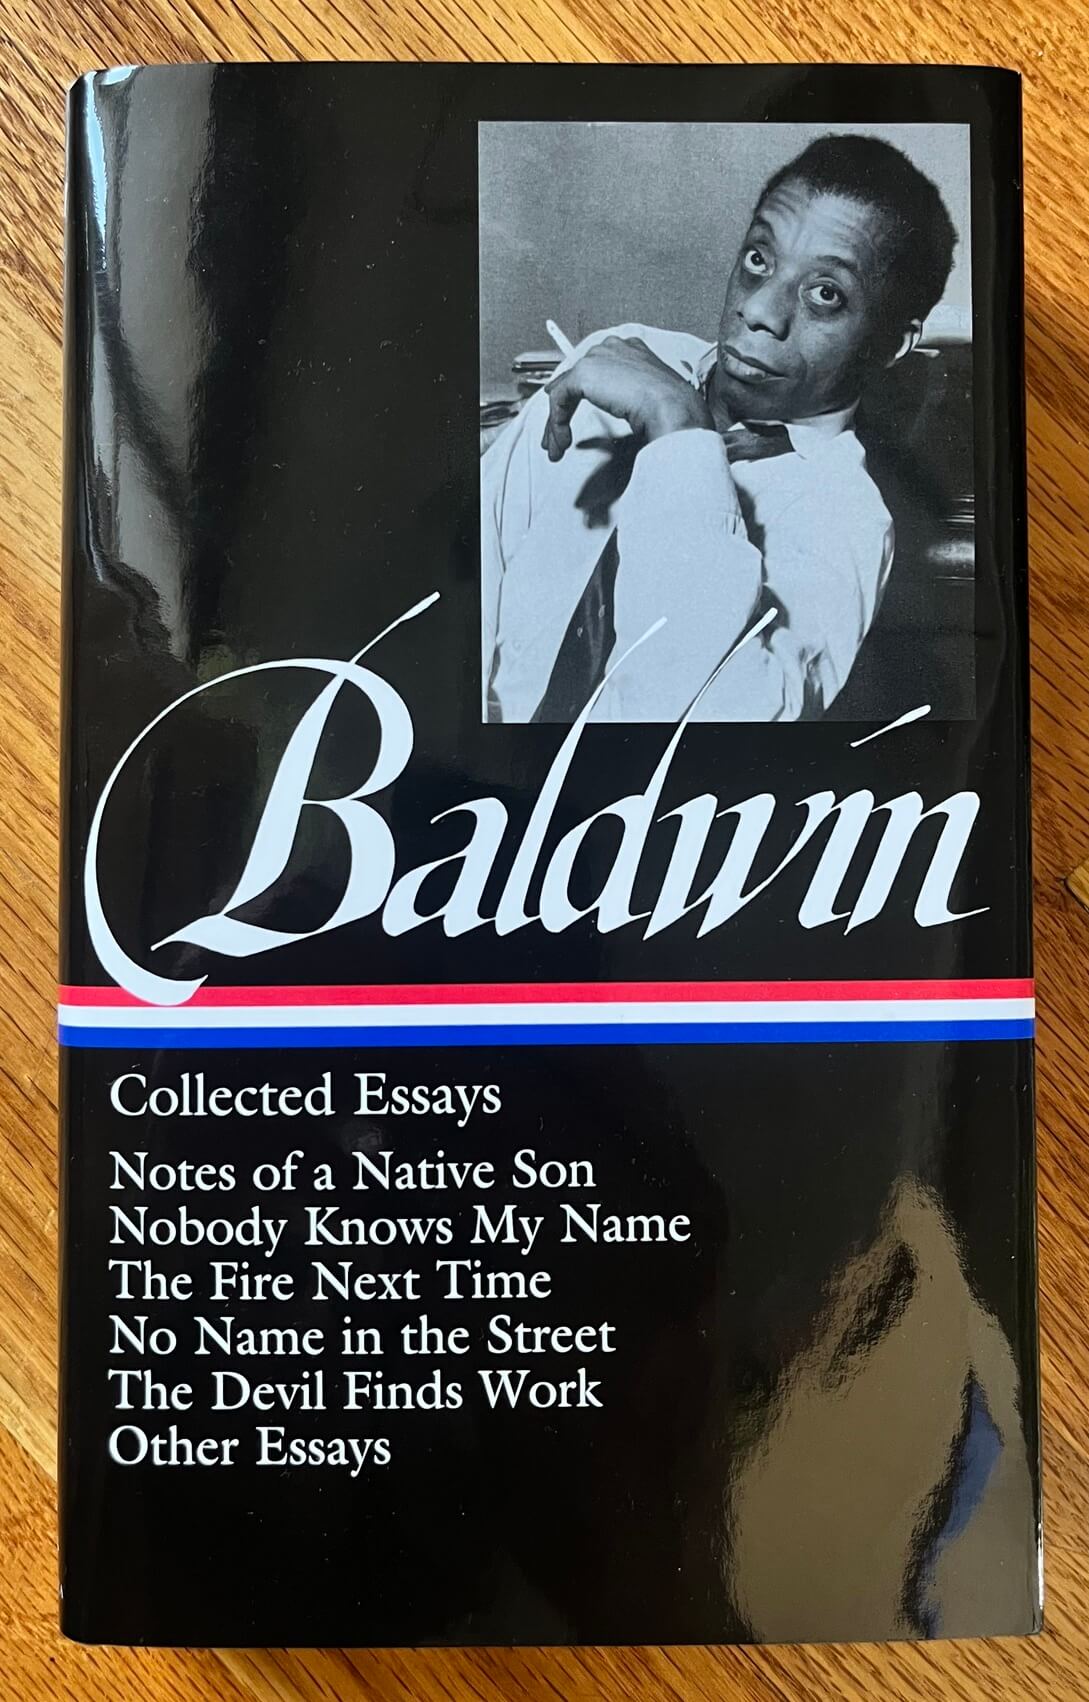 “Baldwin: Collected Essays” by James Baldwin